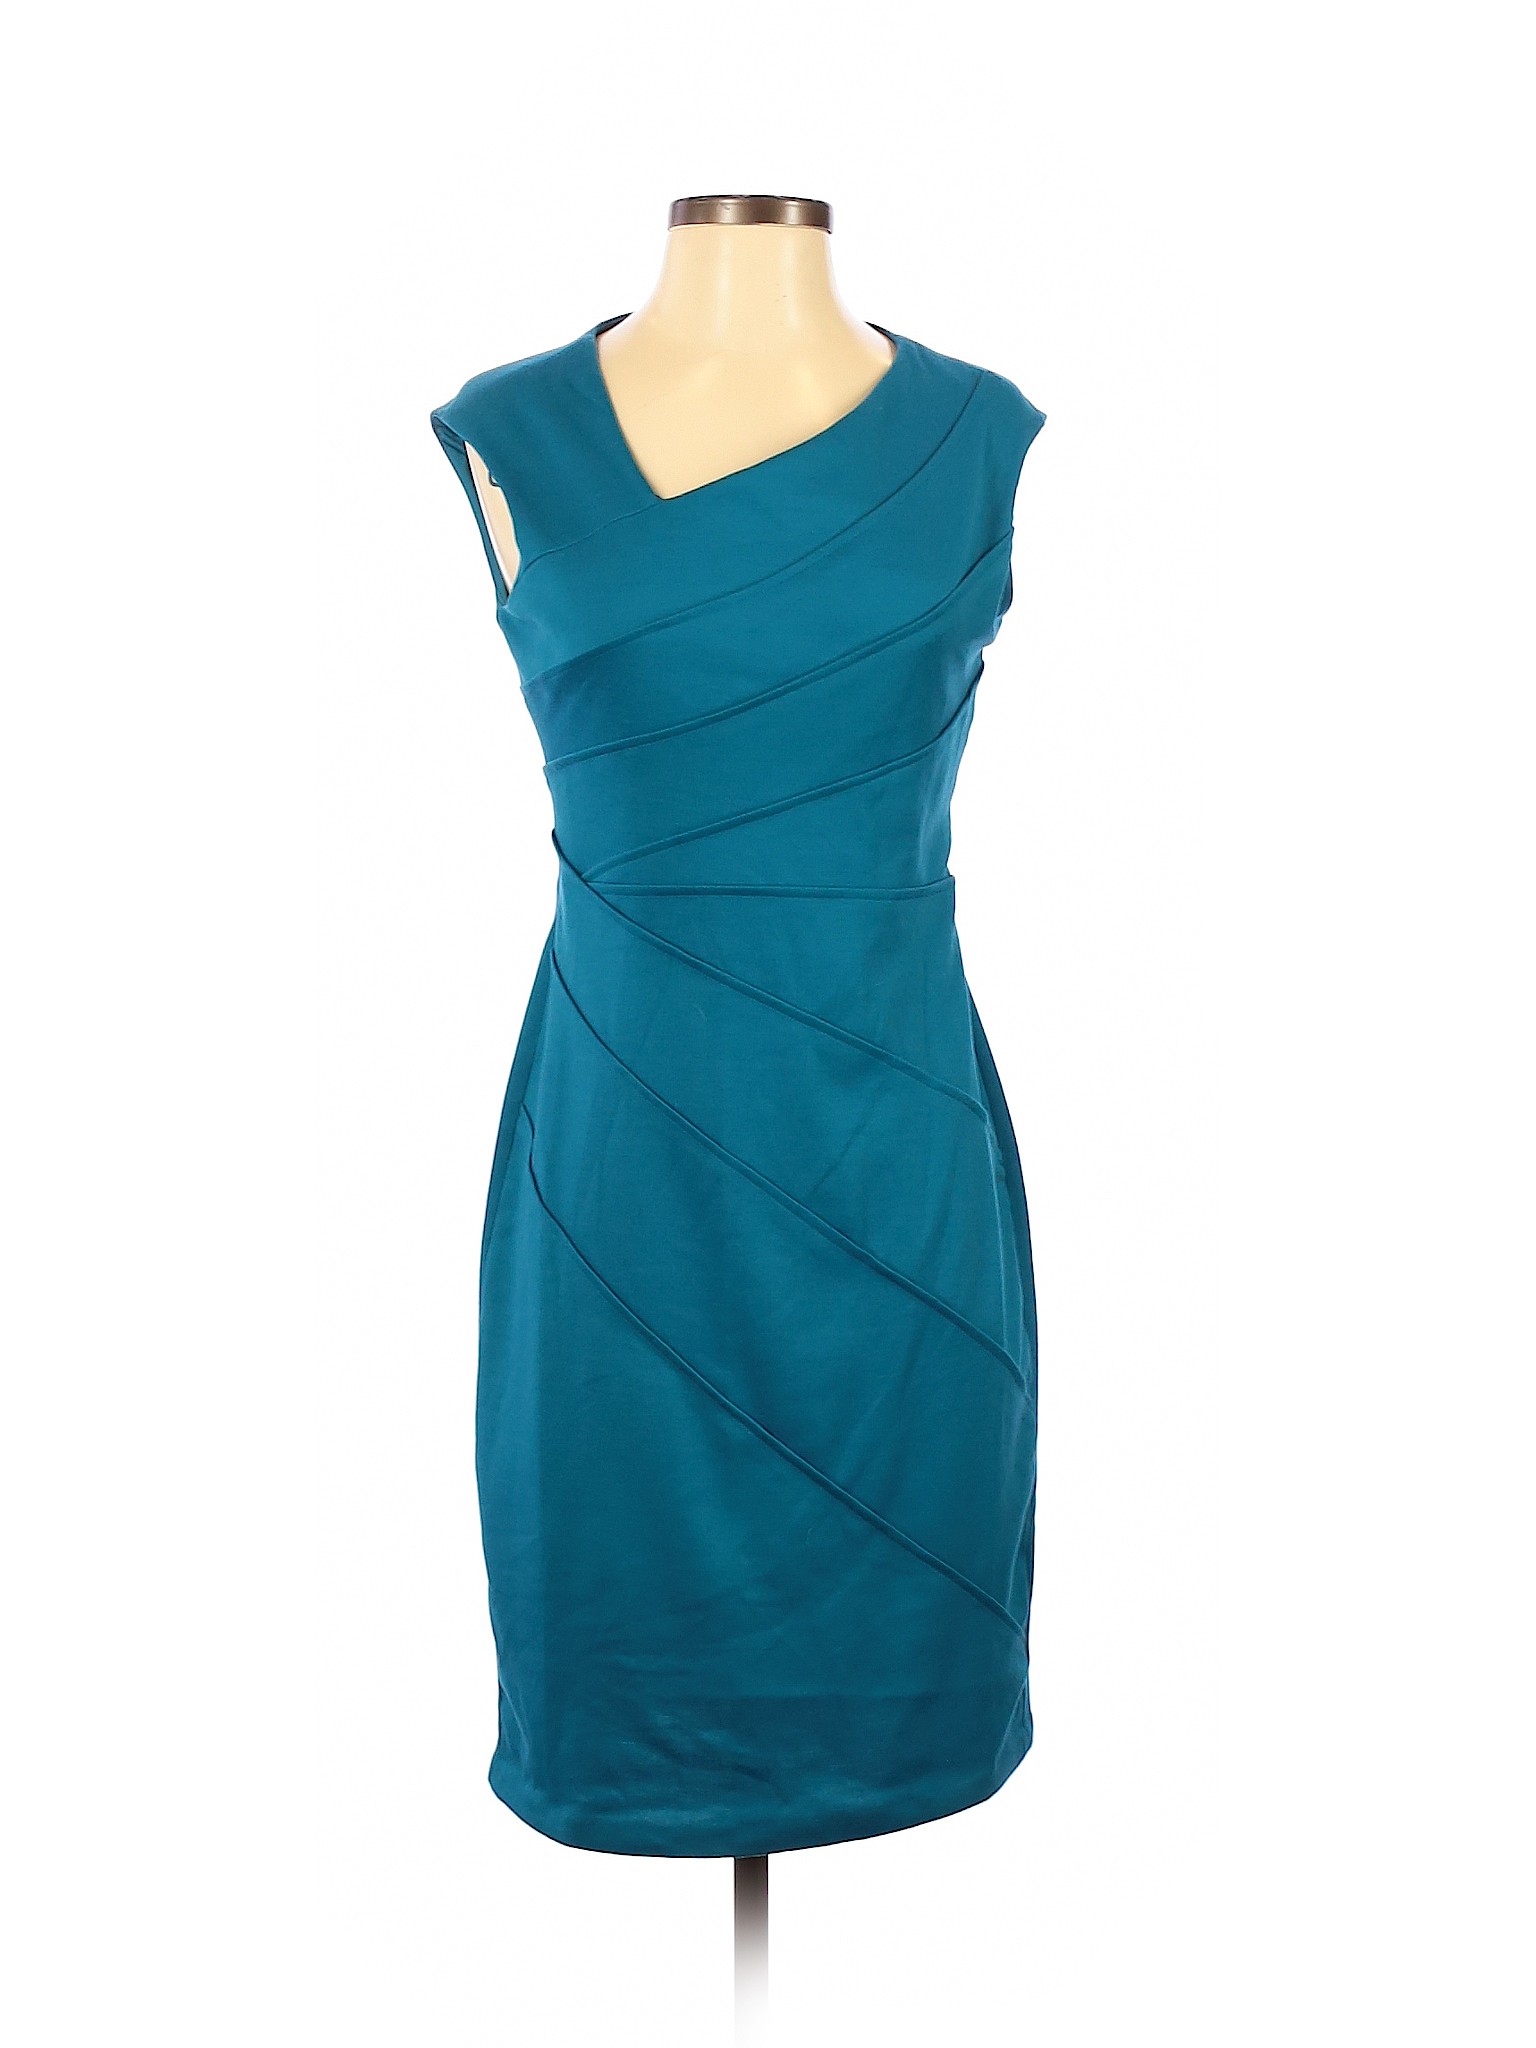 Roz & Ali Women Green Casual Dress 4 | eBay